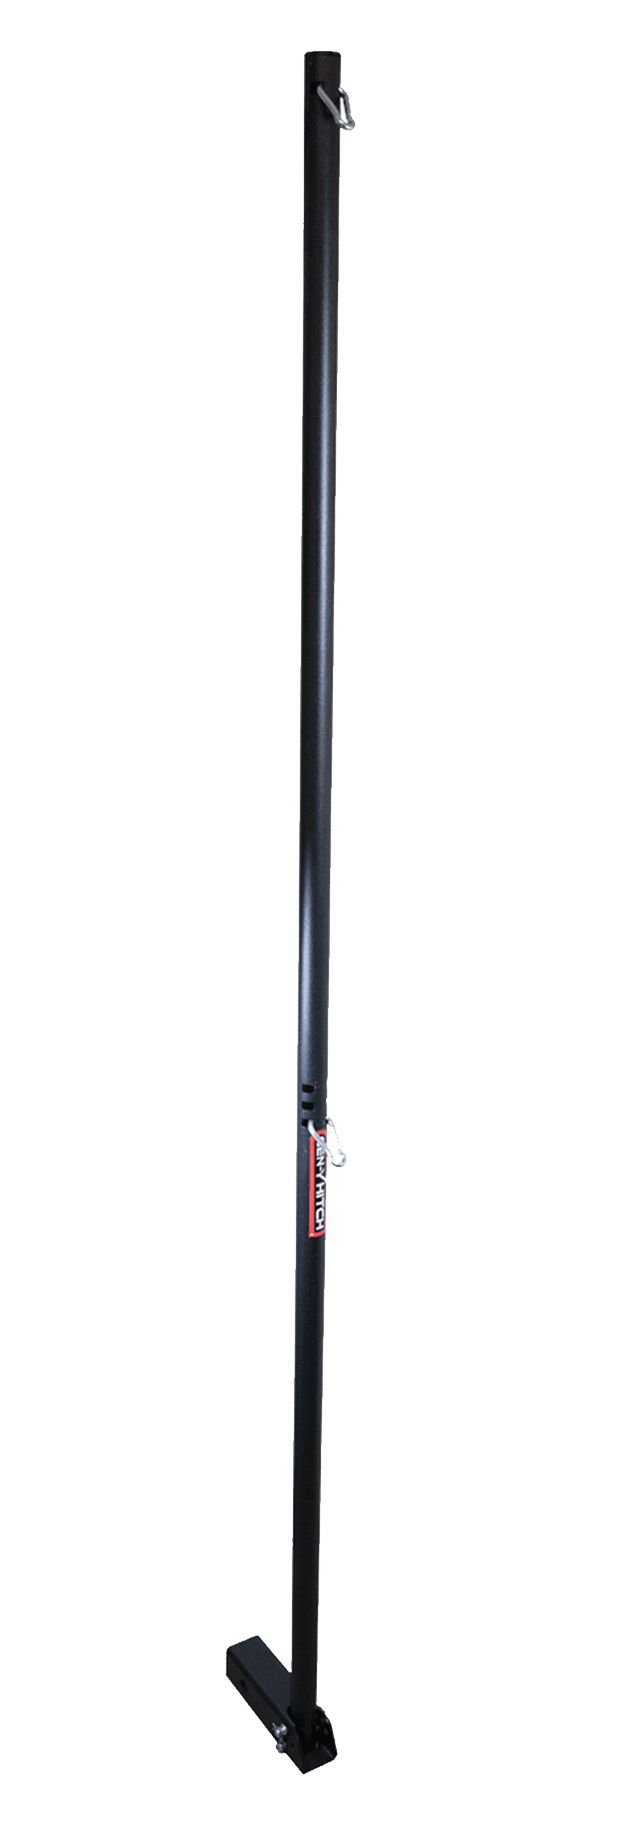 Bass Pro Shops Telescoping Flag Pole